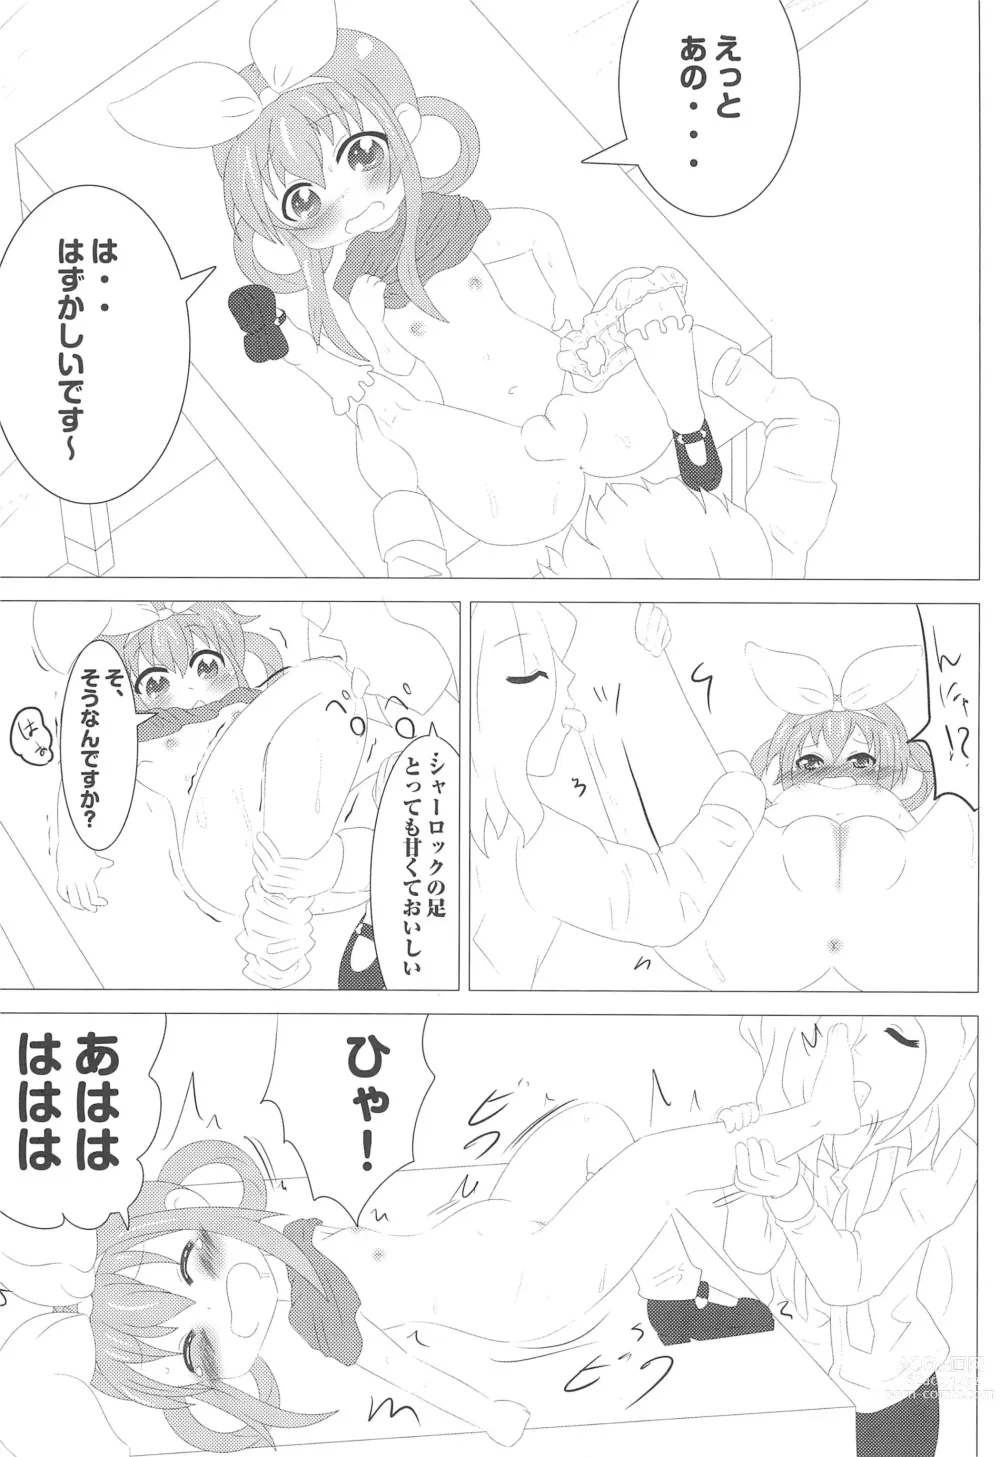 Page 7 of doujinshi Semen-ya-san de Arubaito